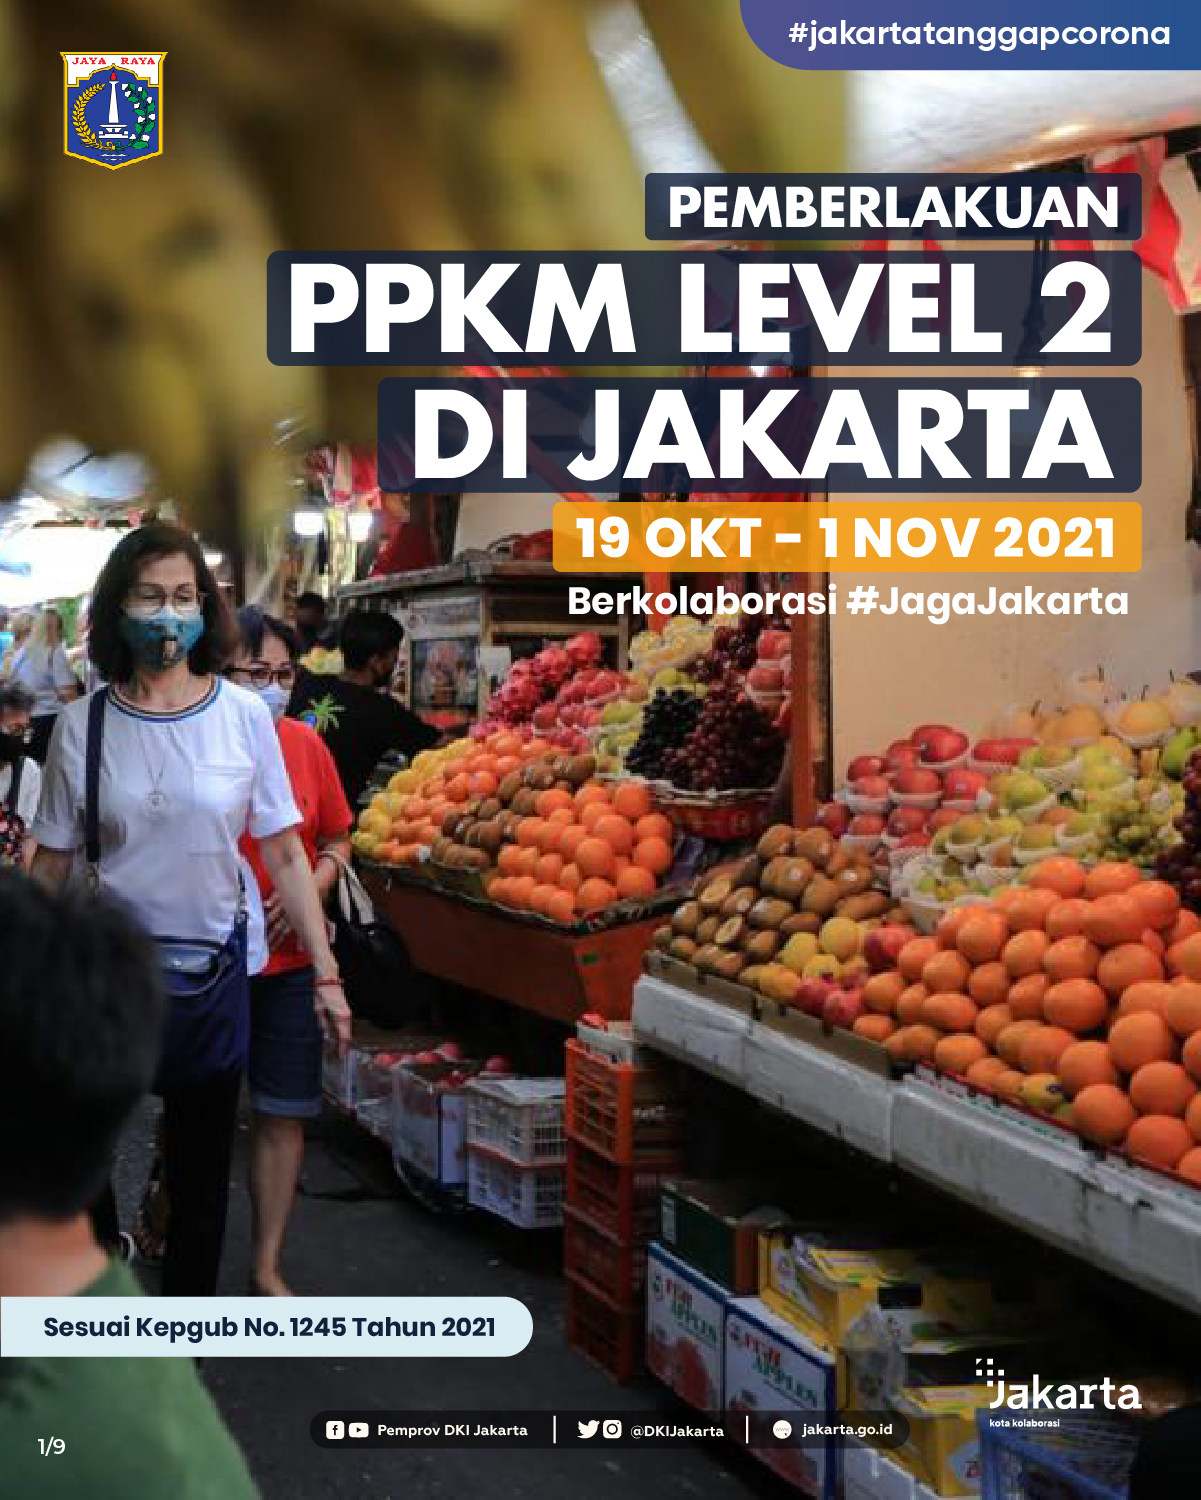 Pemberlakuan PPKM Level 2 di Jakarta